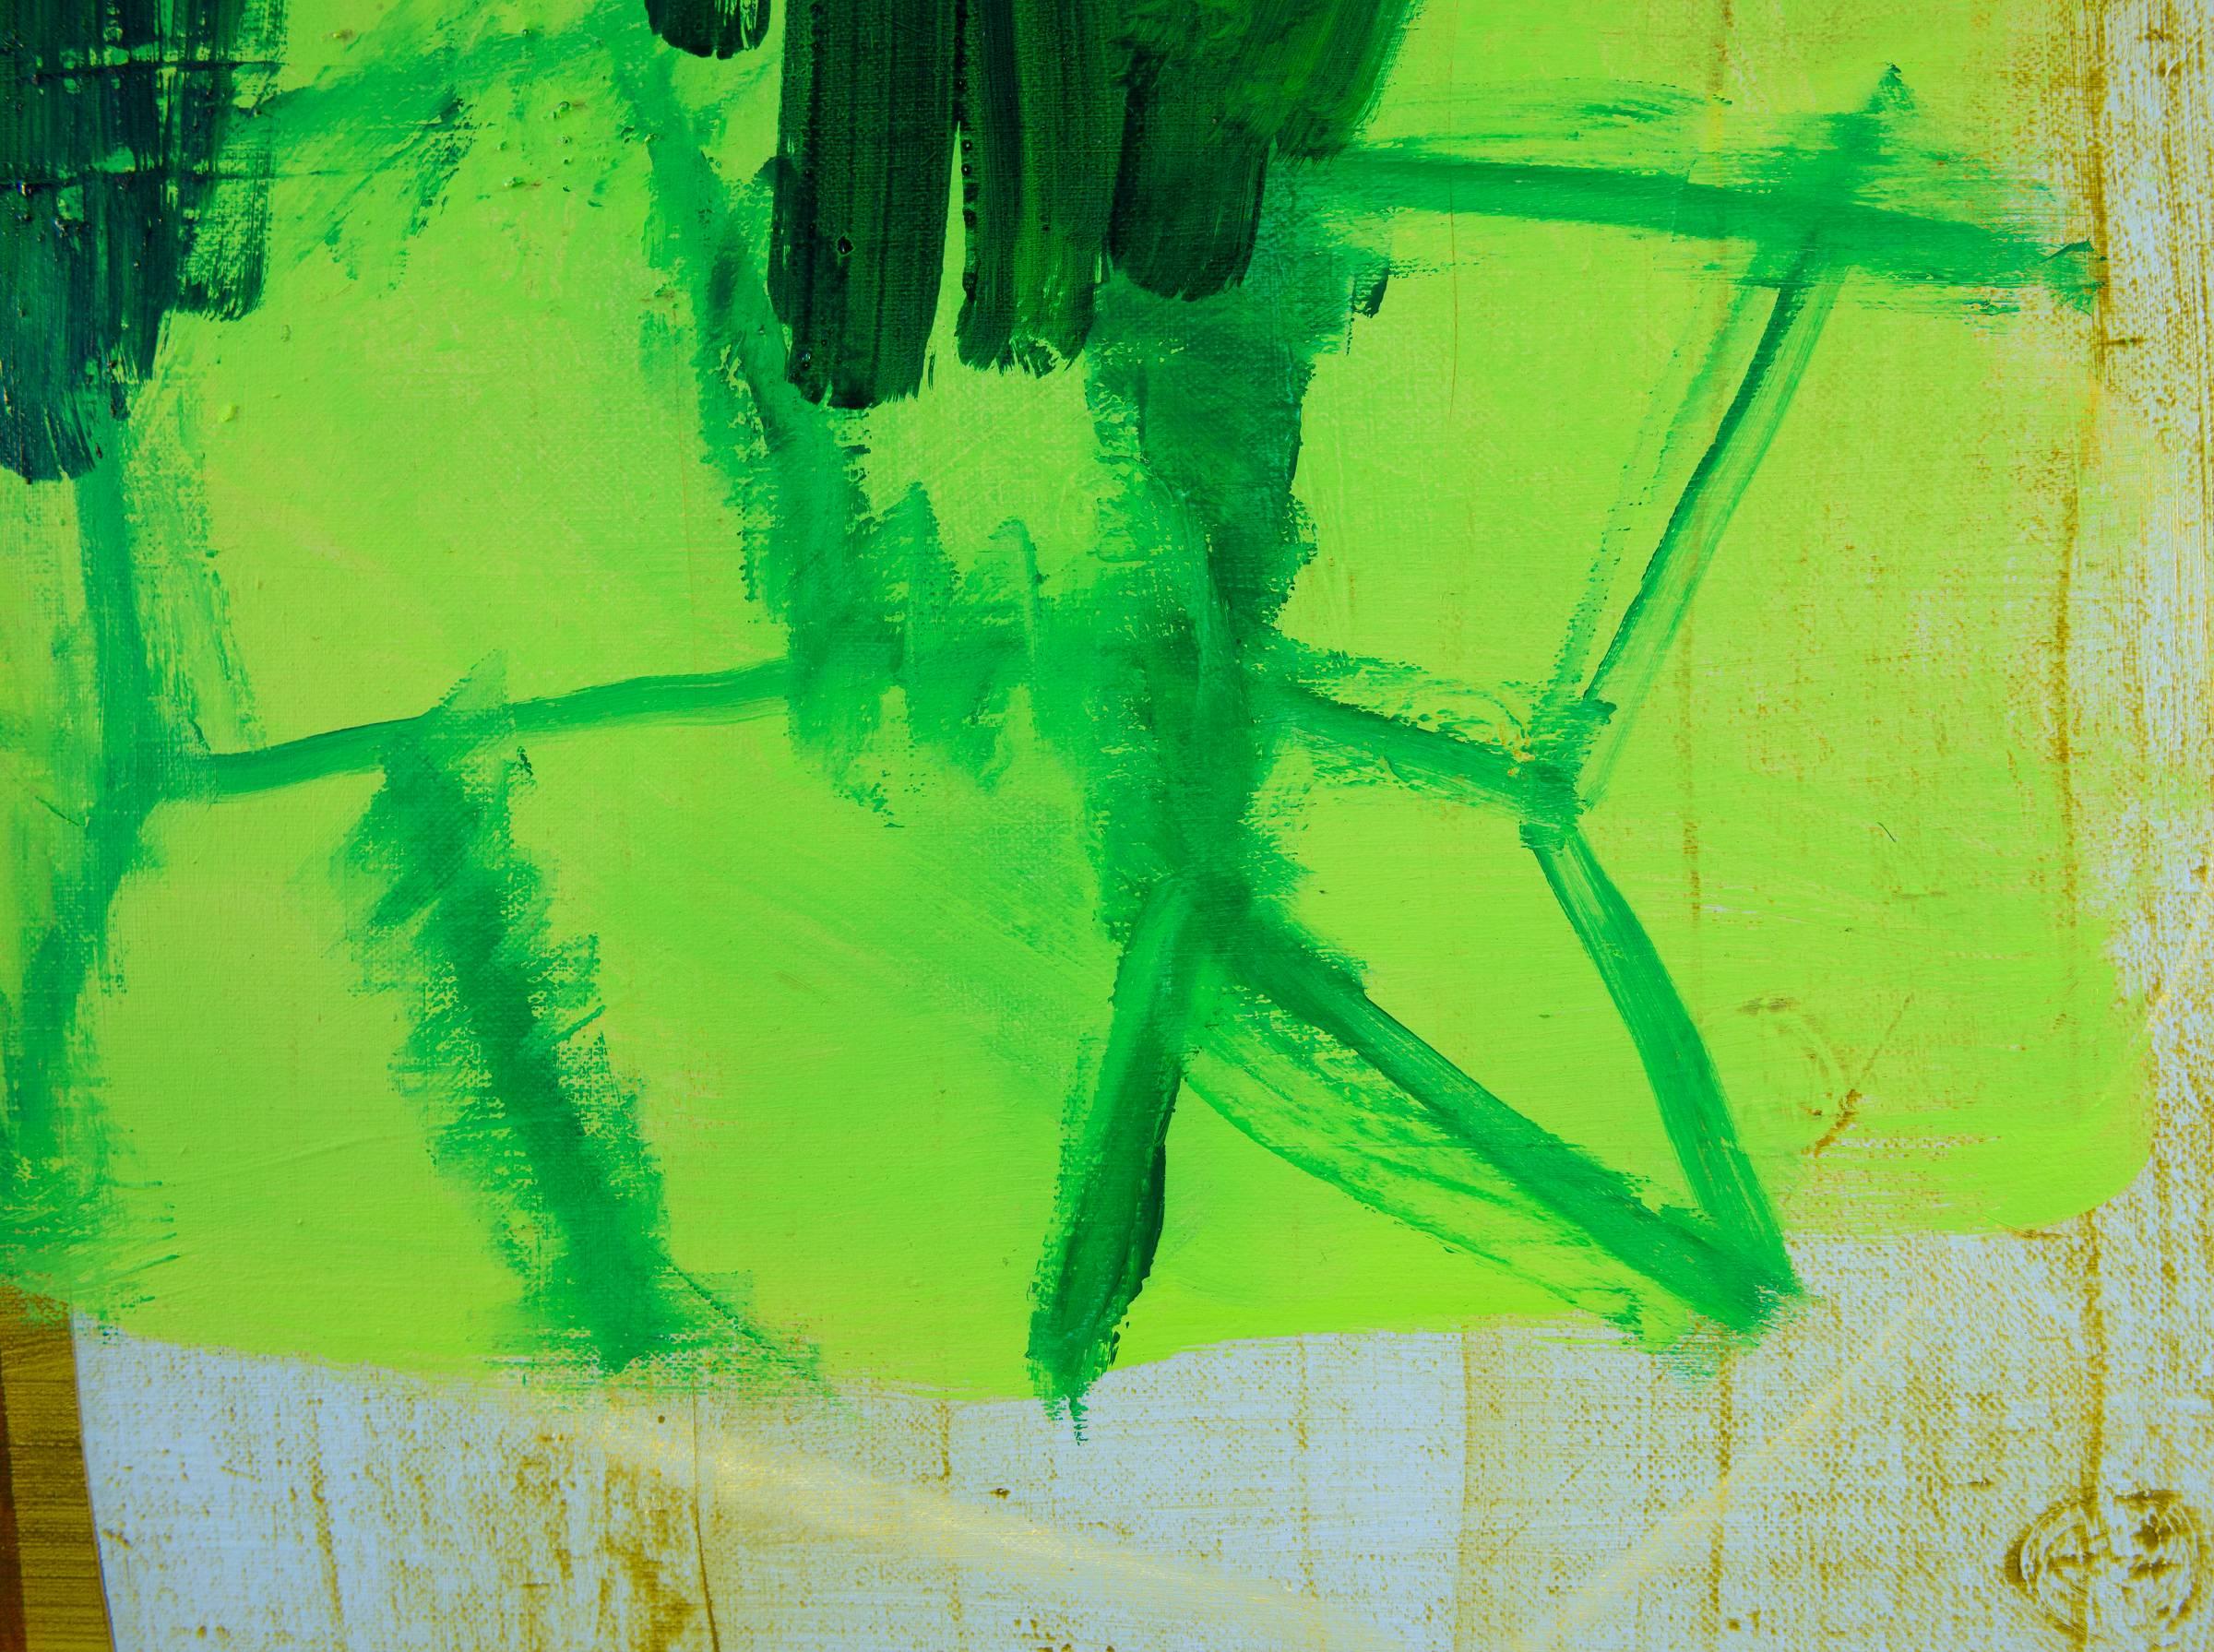 Night Fall - Green Abstract Painting by Becky Yazdan